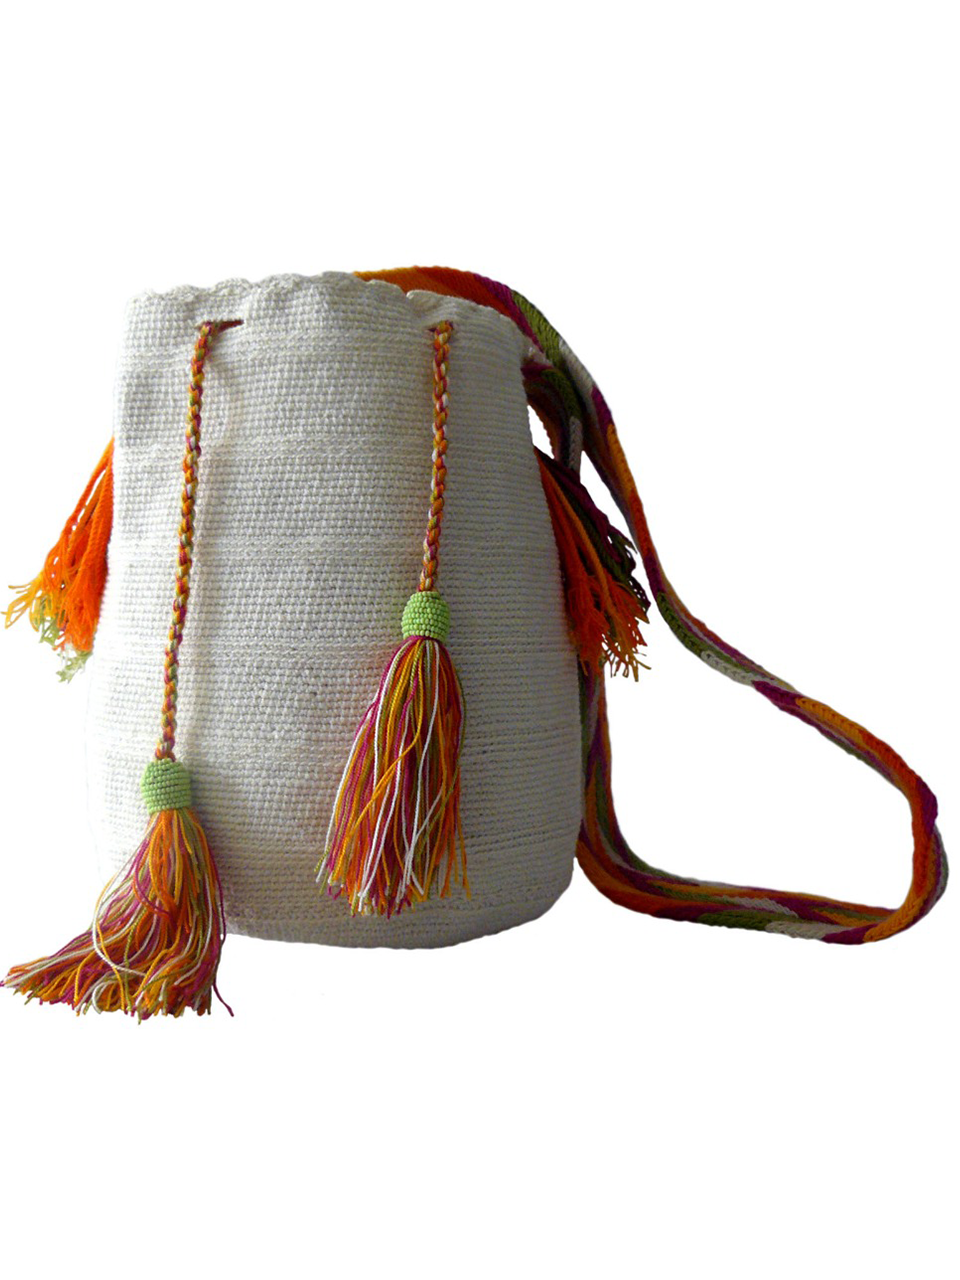 White woven shoulder bag with tassels and beads Palmazul Beachwear Wayuu Mochila